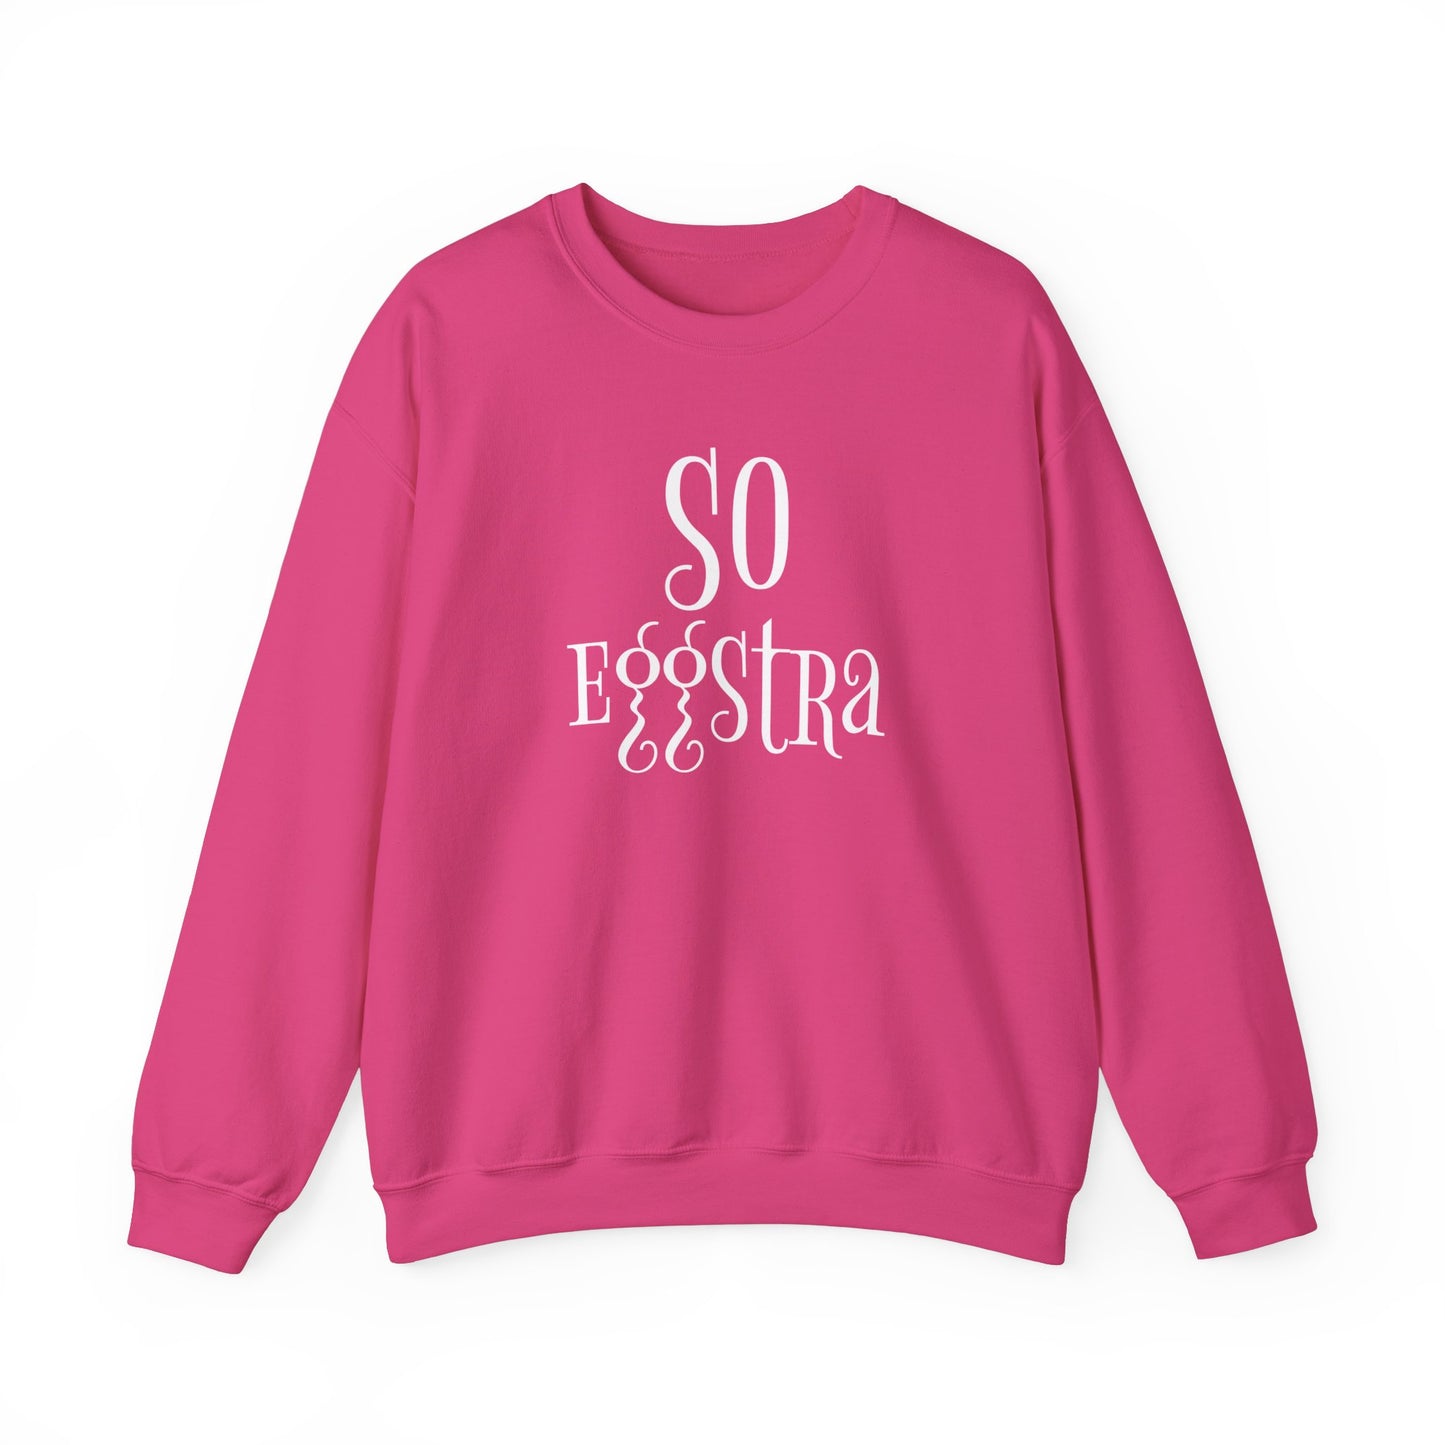 So Eggstra Sweatshirt